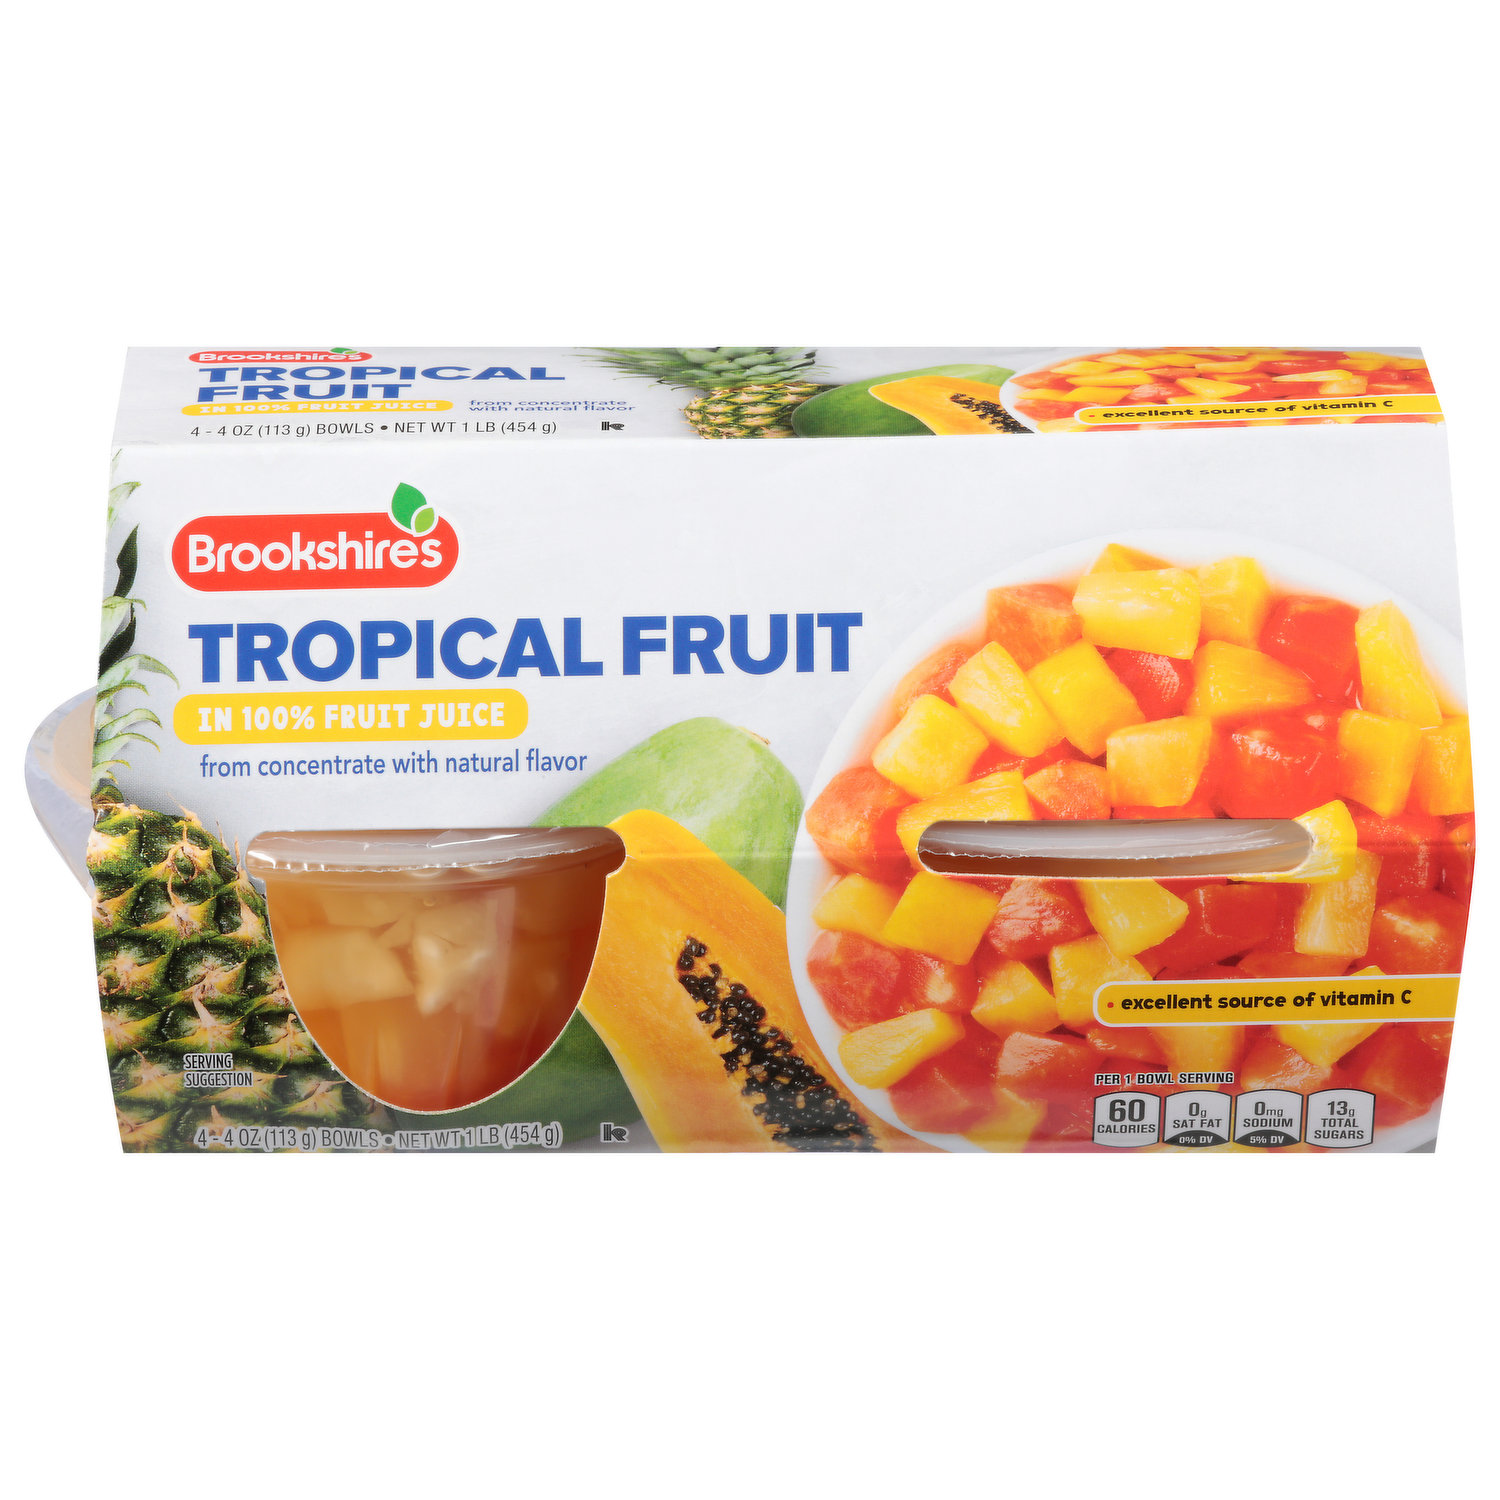 Brookshire's Tropical Fruit, in 100% Fruit Juice